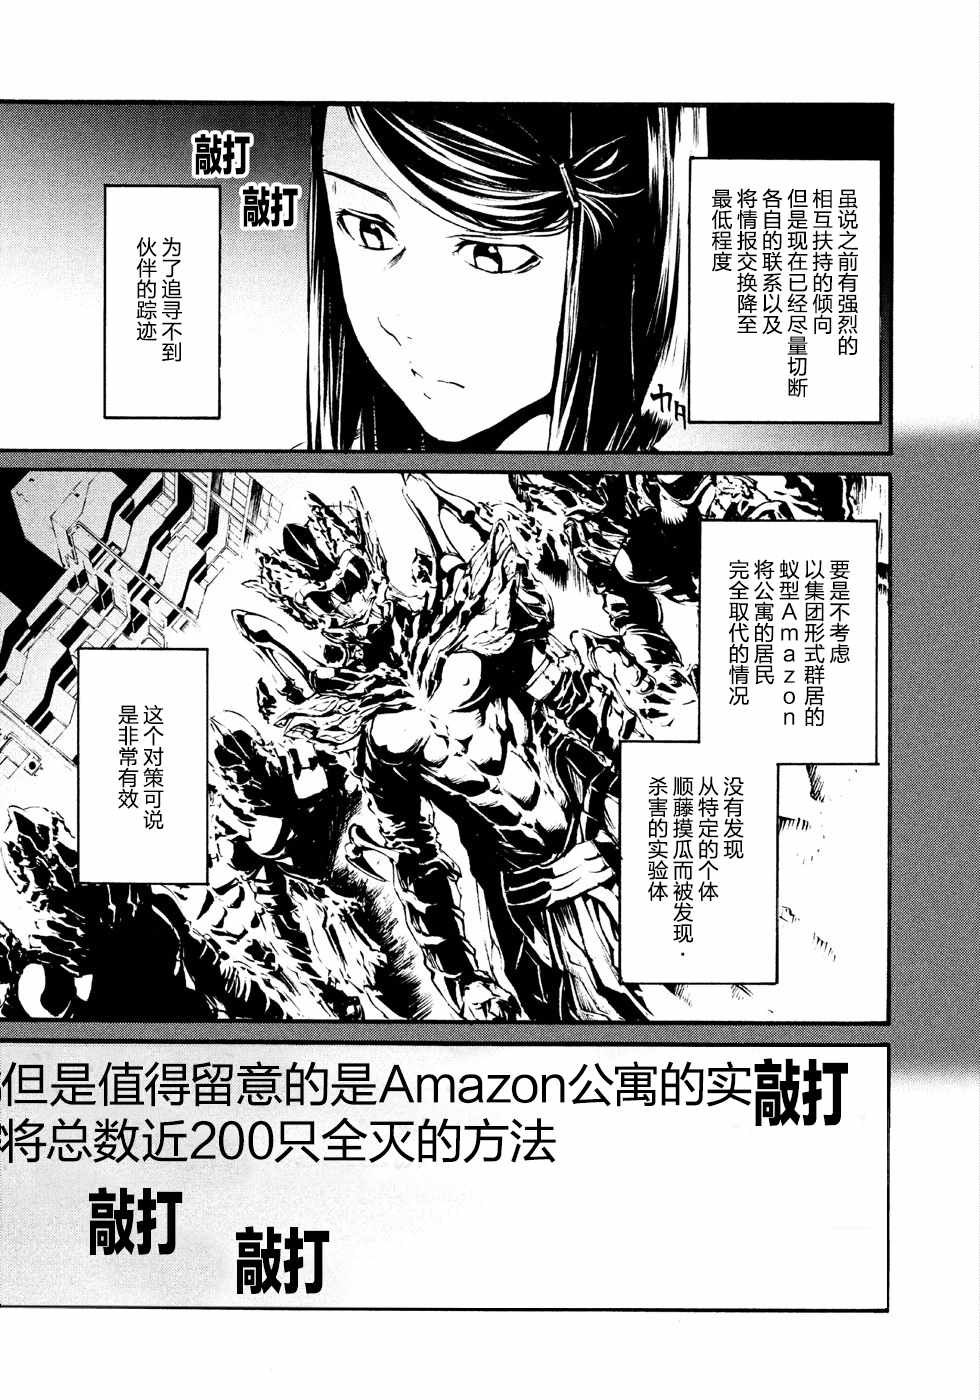 《假面骑士Amazons》漫画 Amazons 萤火02